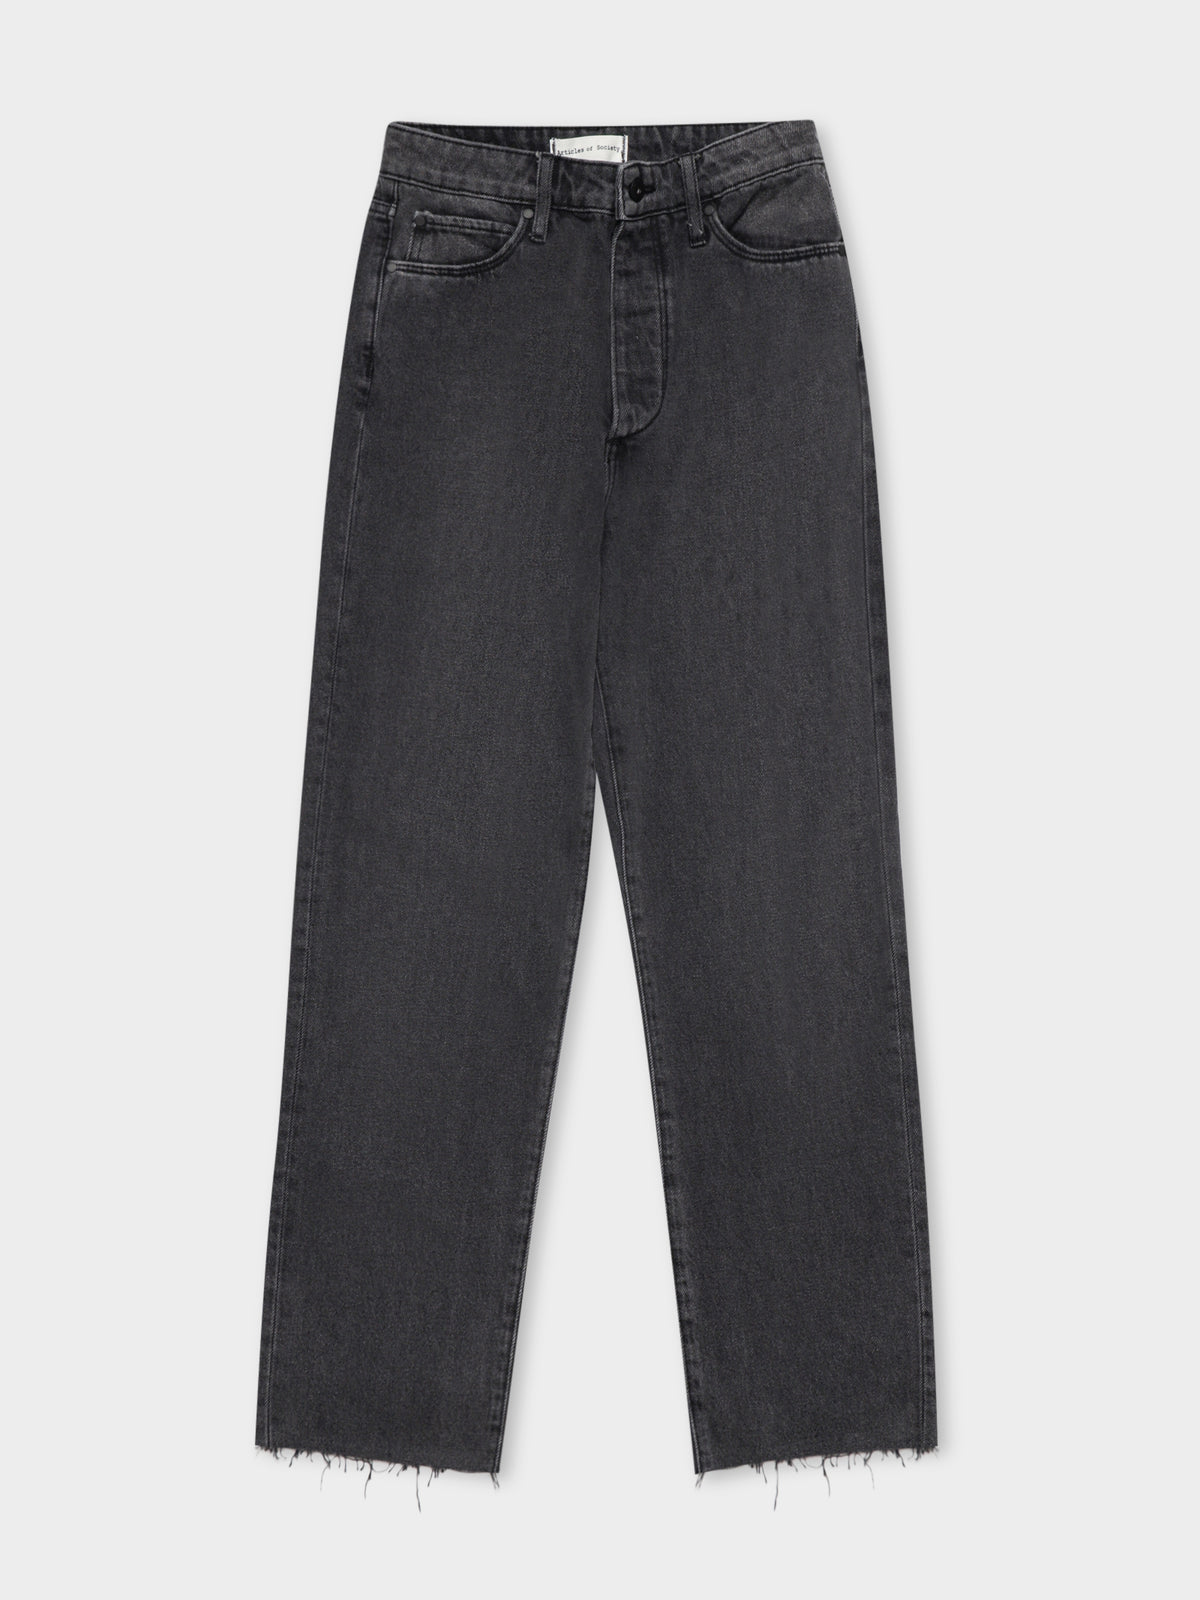 High Nina Cropped Jeans in Worn Black